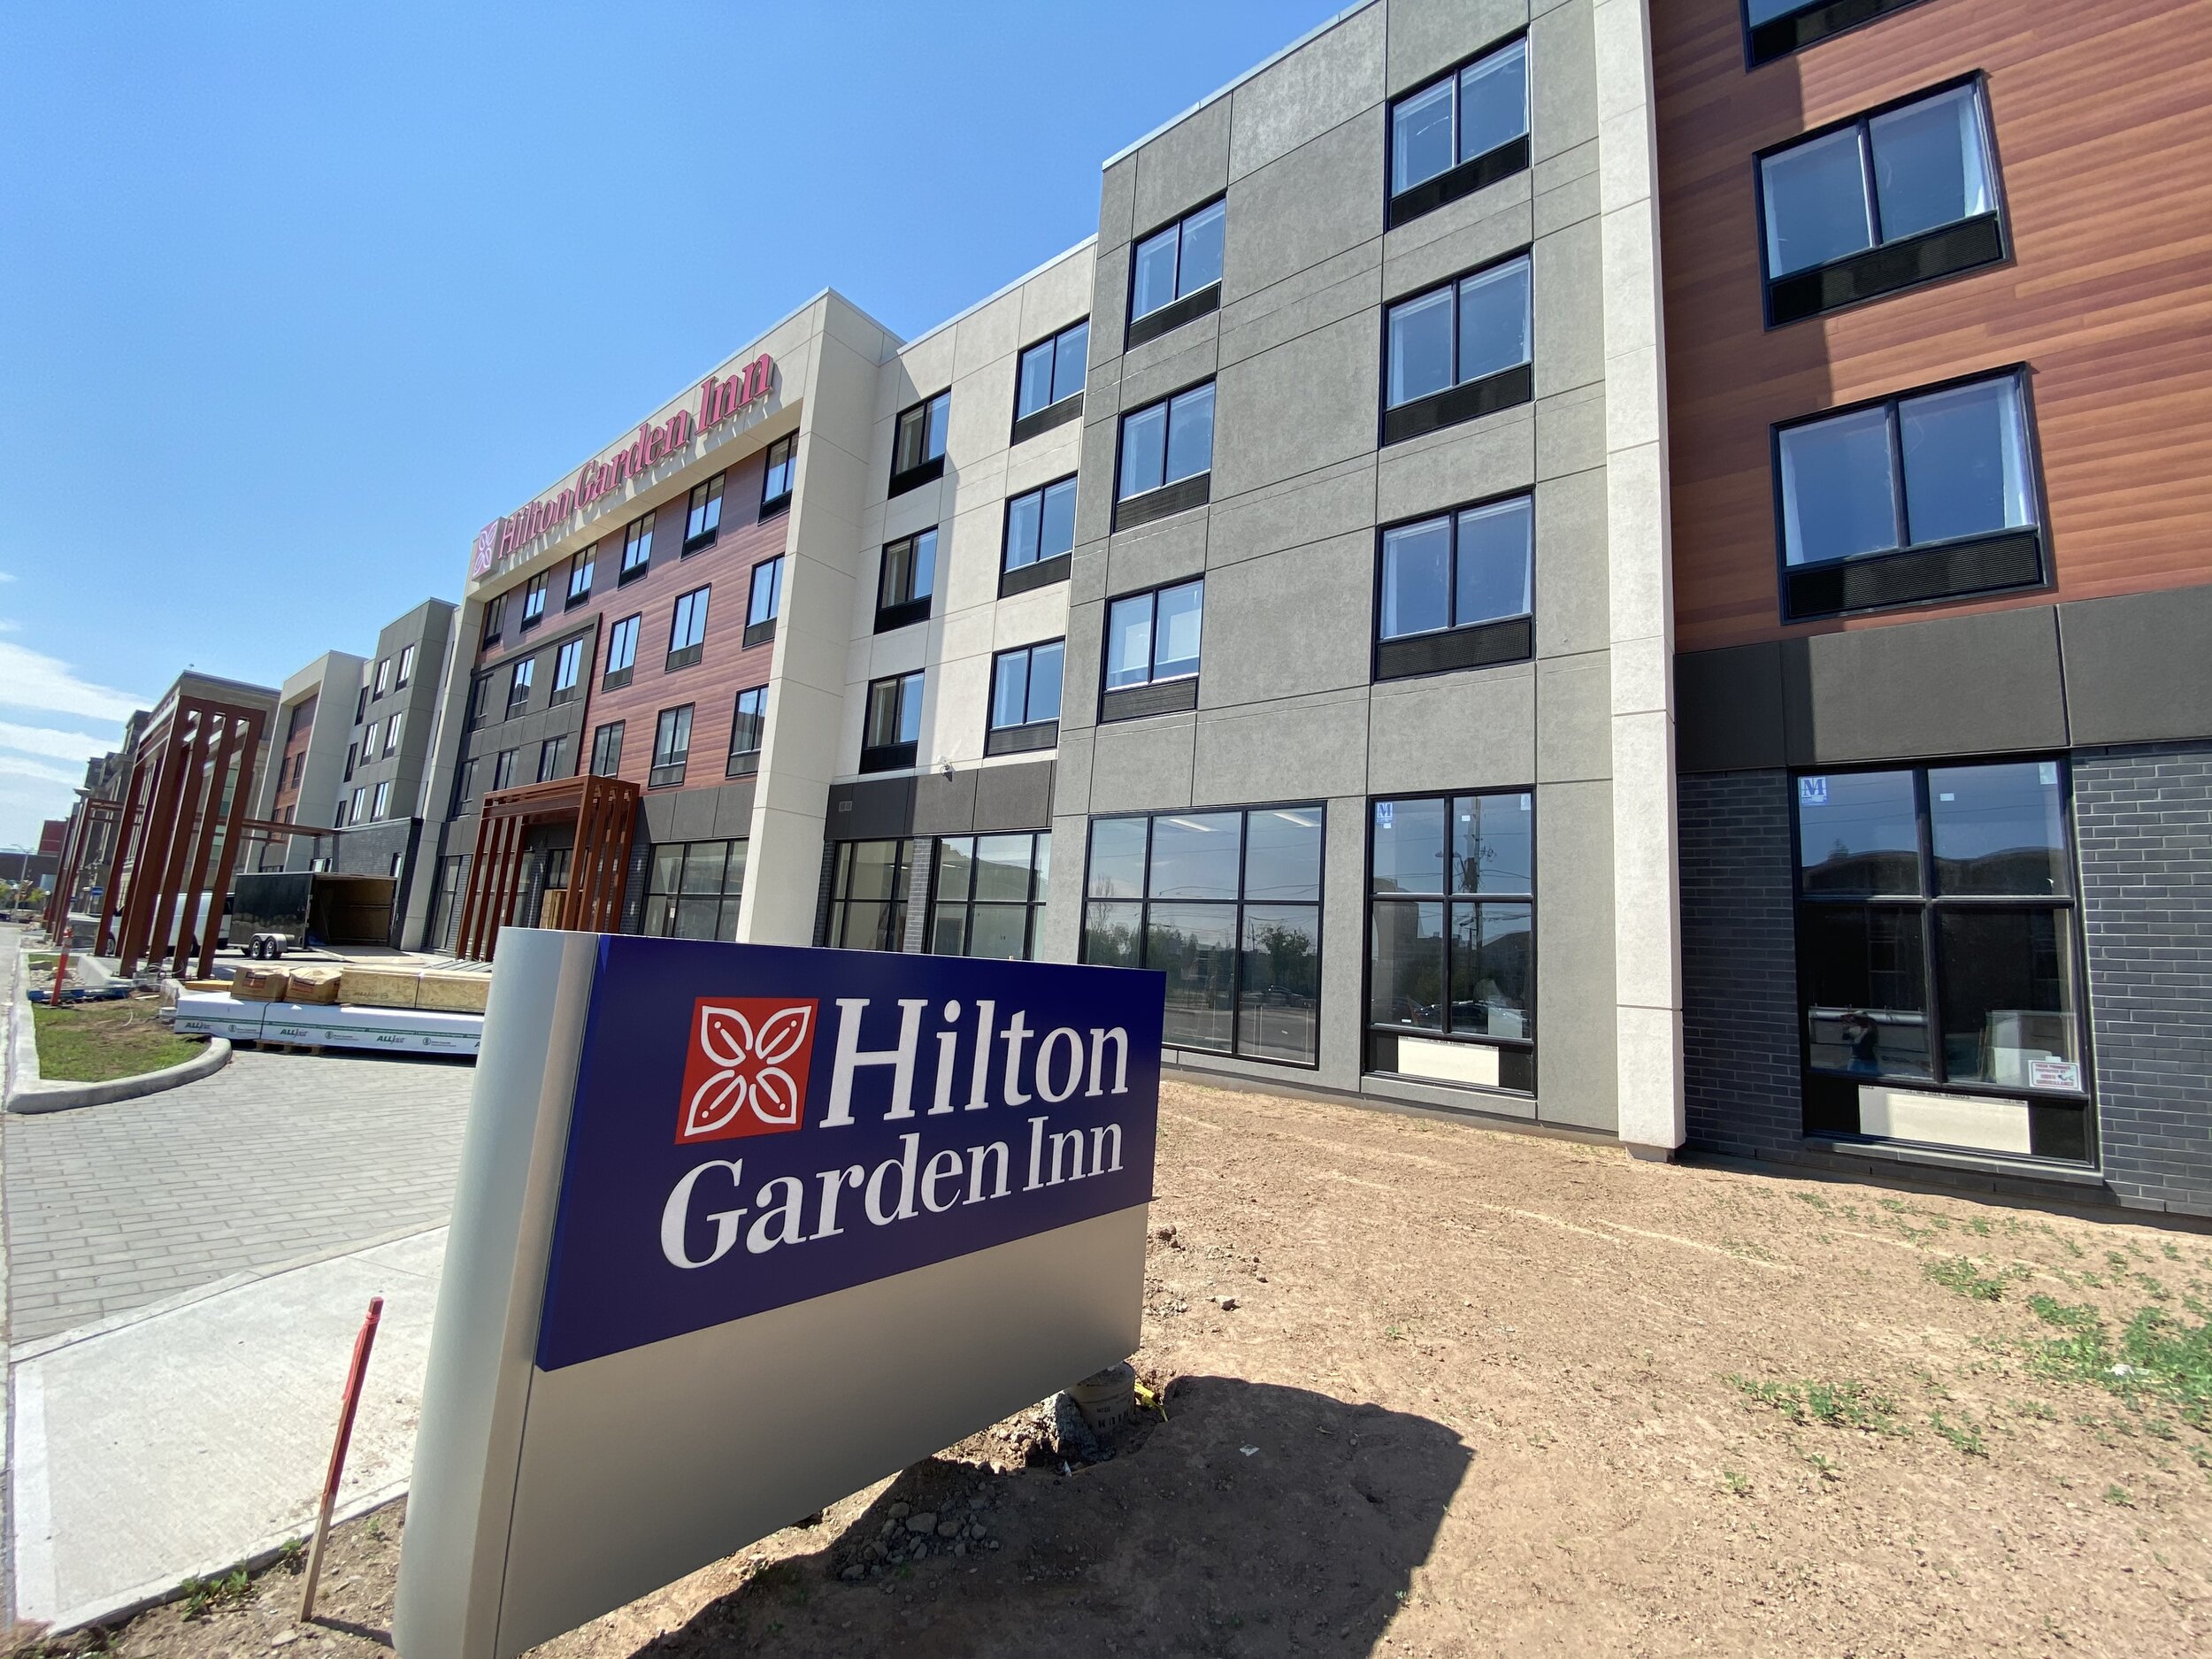 Hilton Garden Inn | Hotel Project